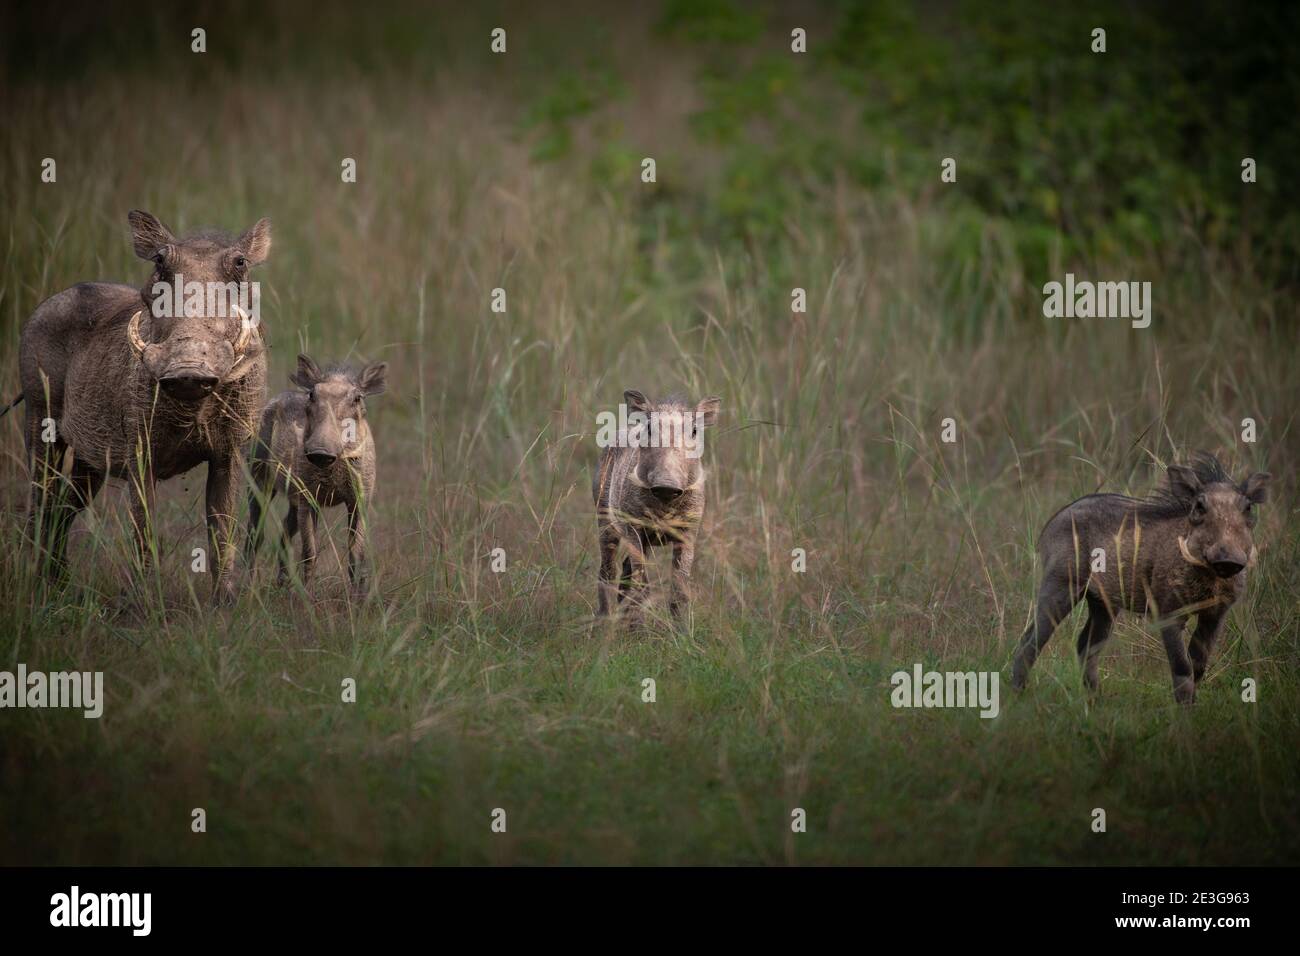 Wild Warthogs in Africa. Stock Photo